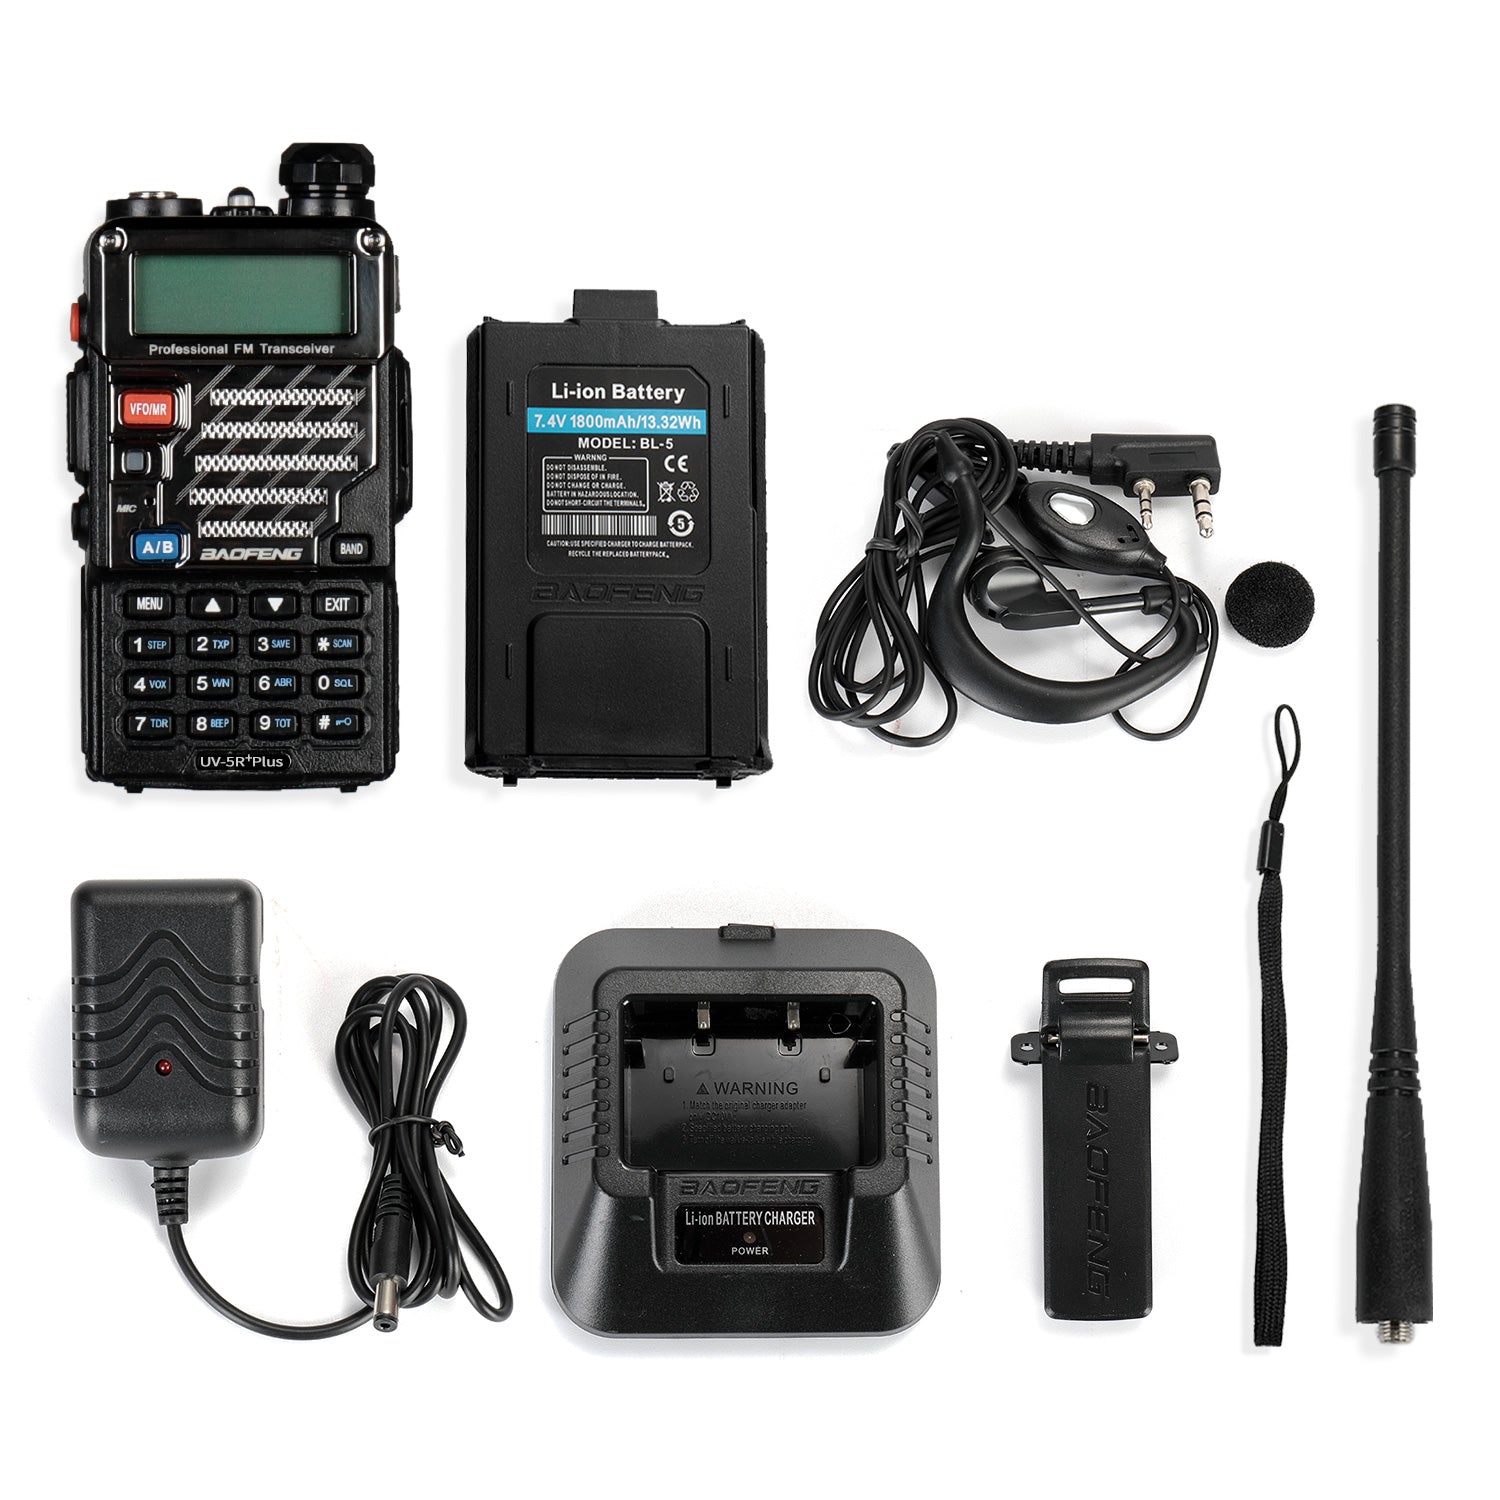 BAOFENG UV-5R+Plus 5W UHF/VHF Radio - Baofeng